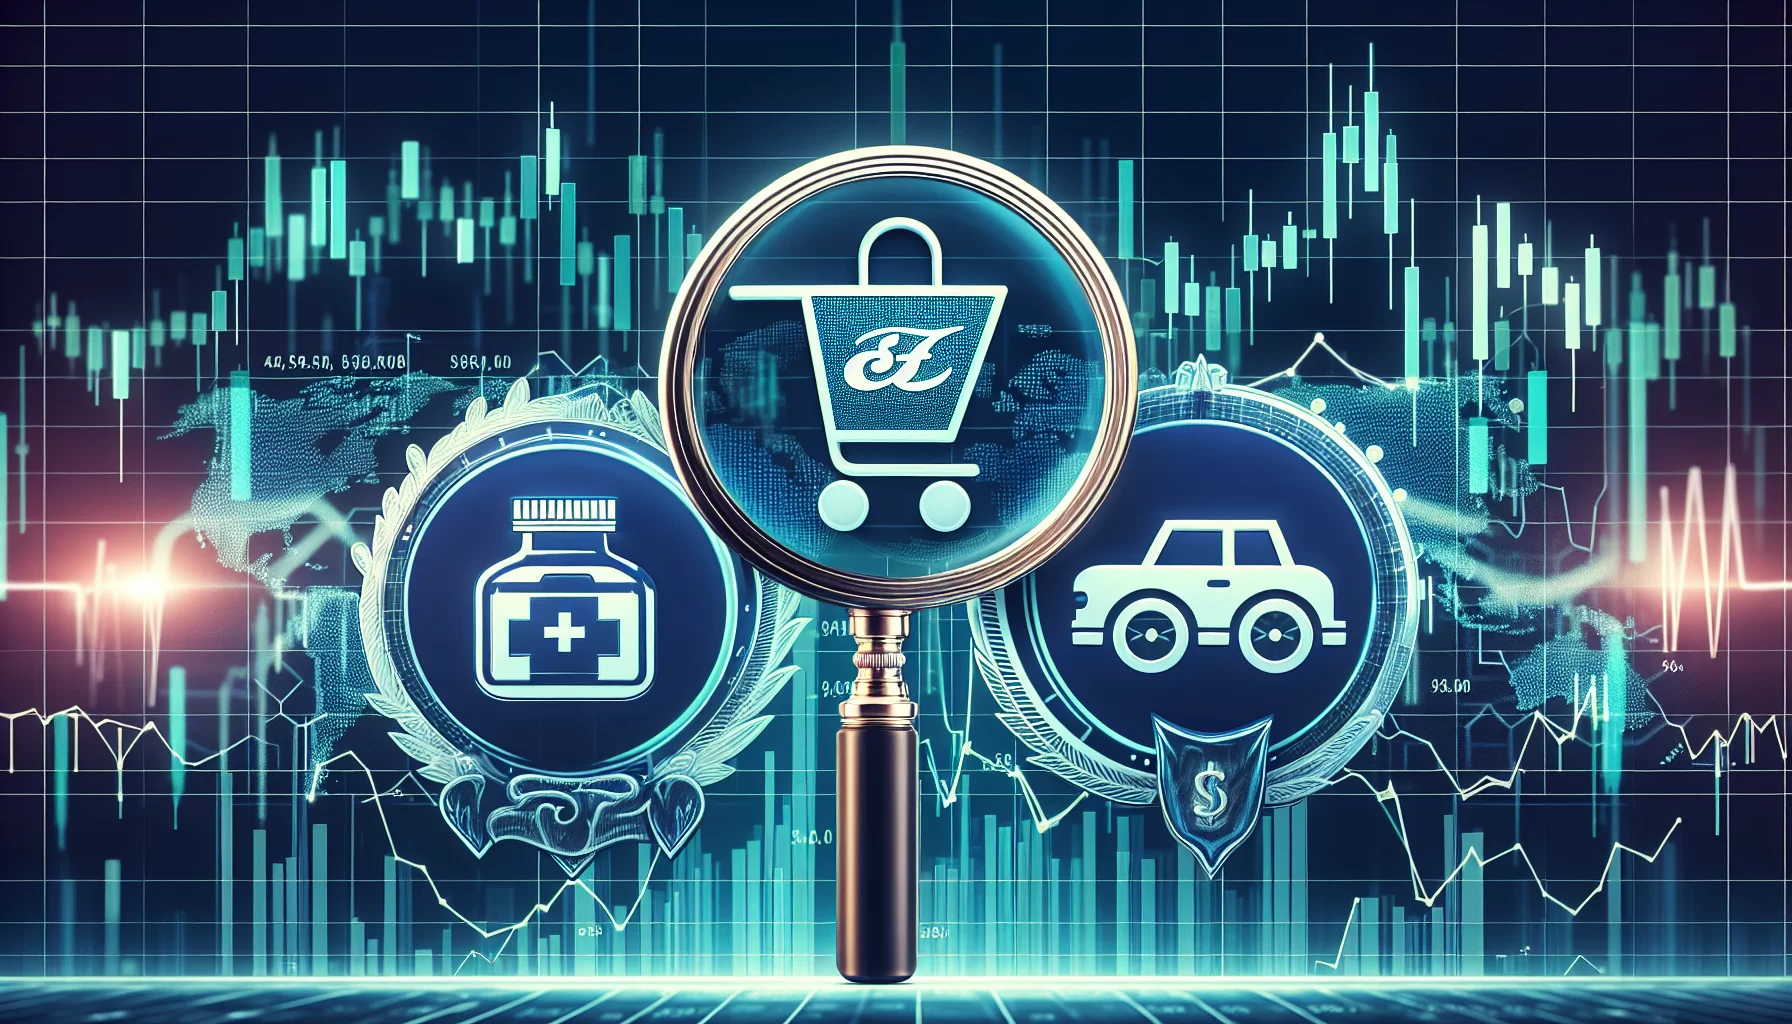 Premarket trading analysis: spotlight on Eli Lilly, General Motors, and Shopify